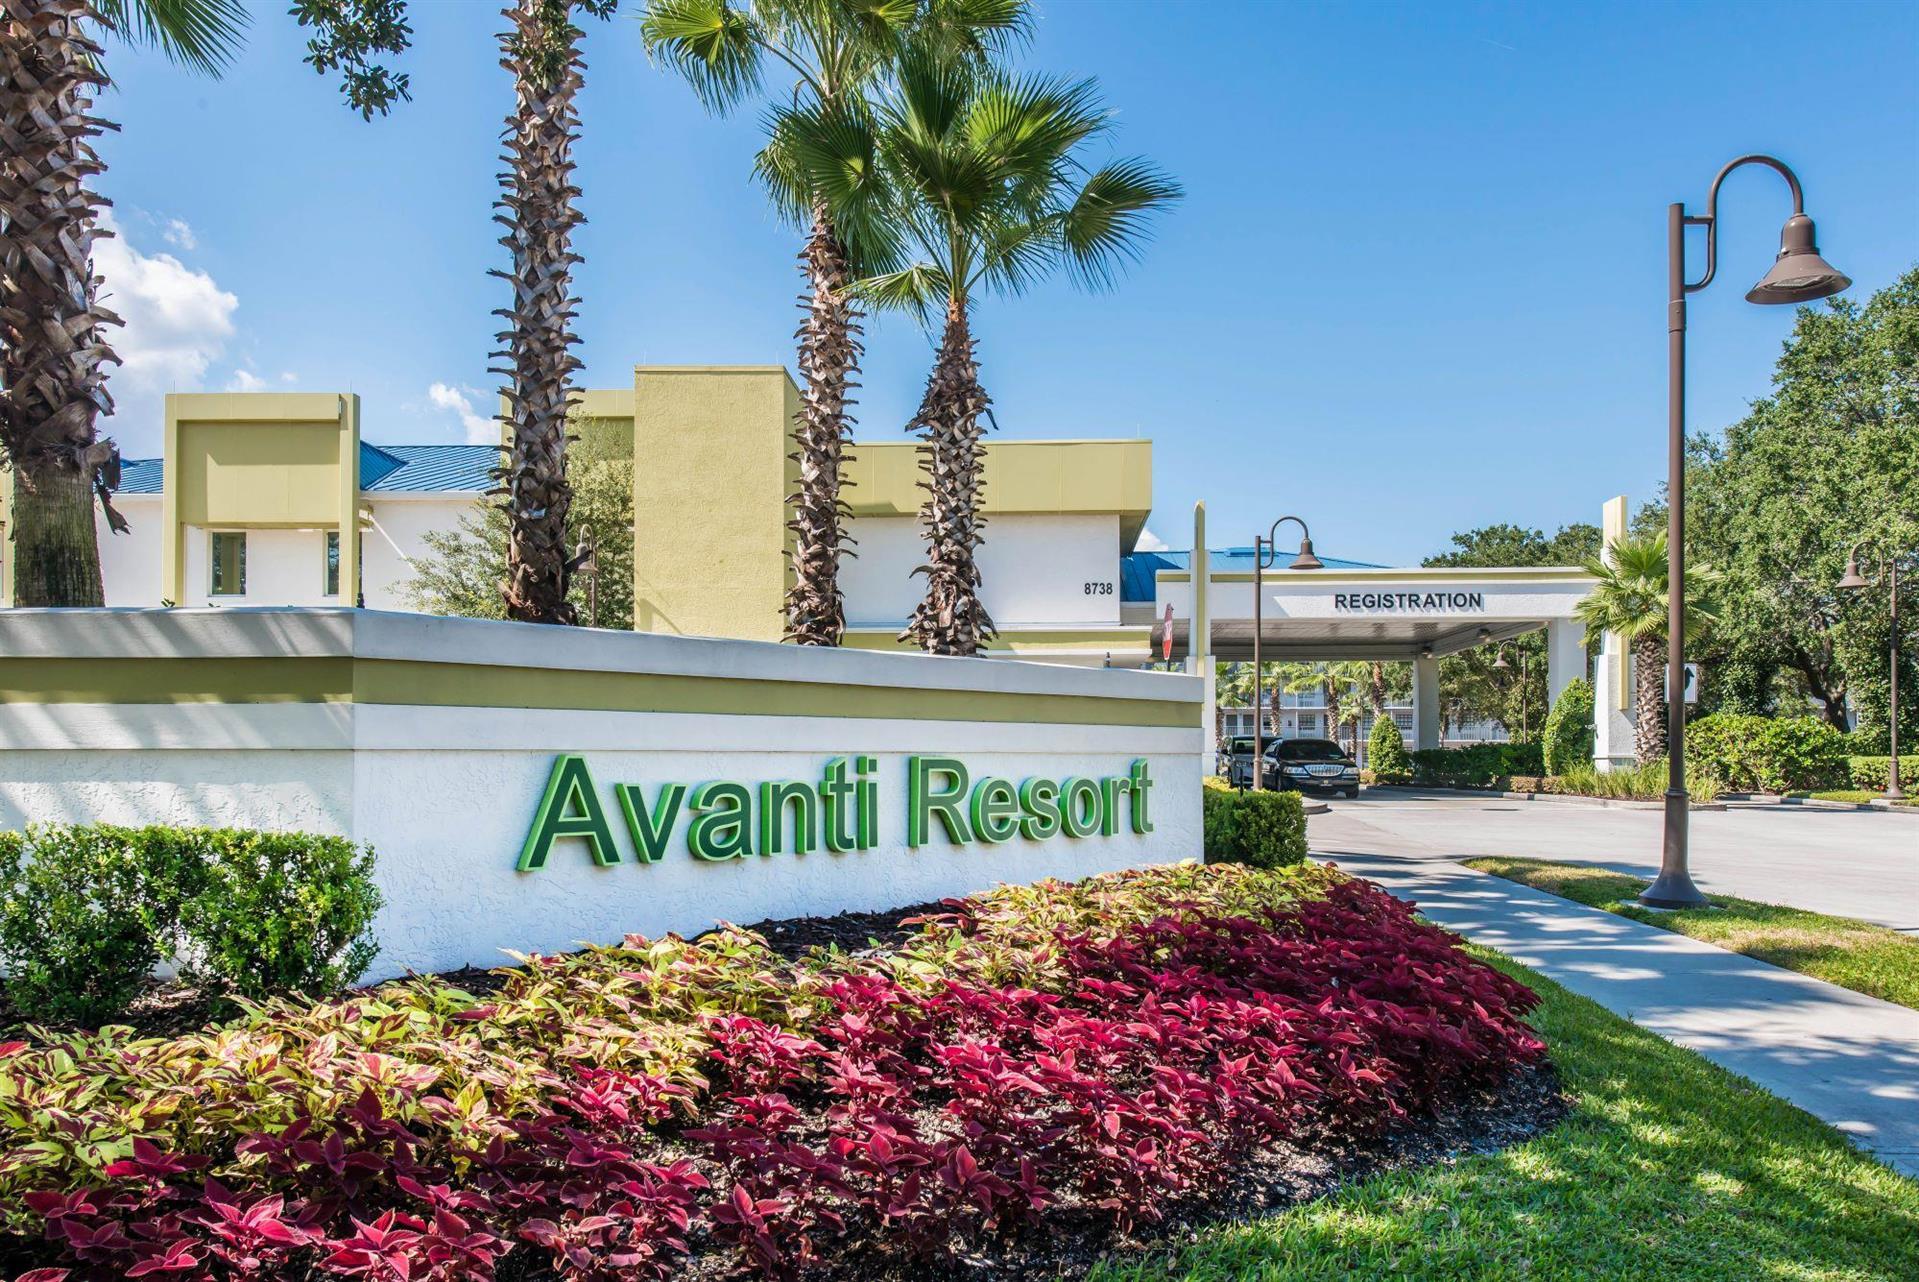 Avanti International Resort in Orlando, FL